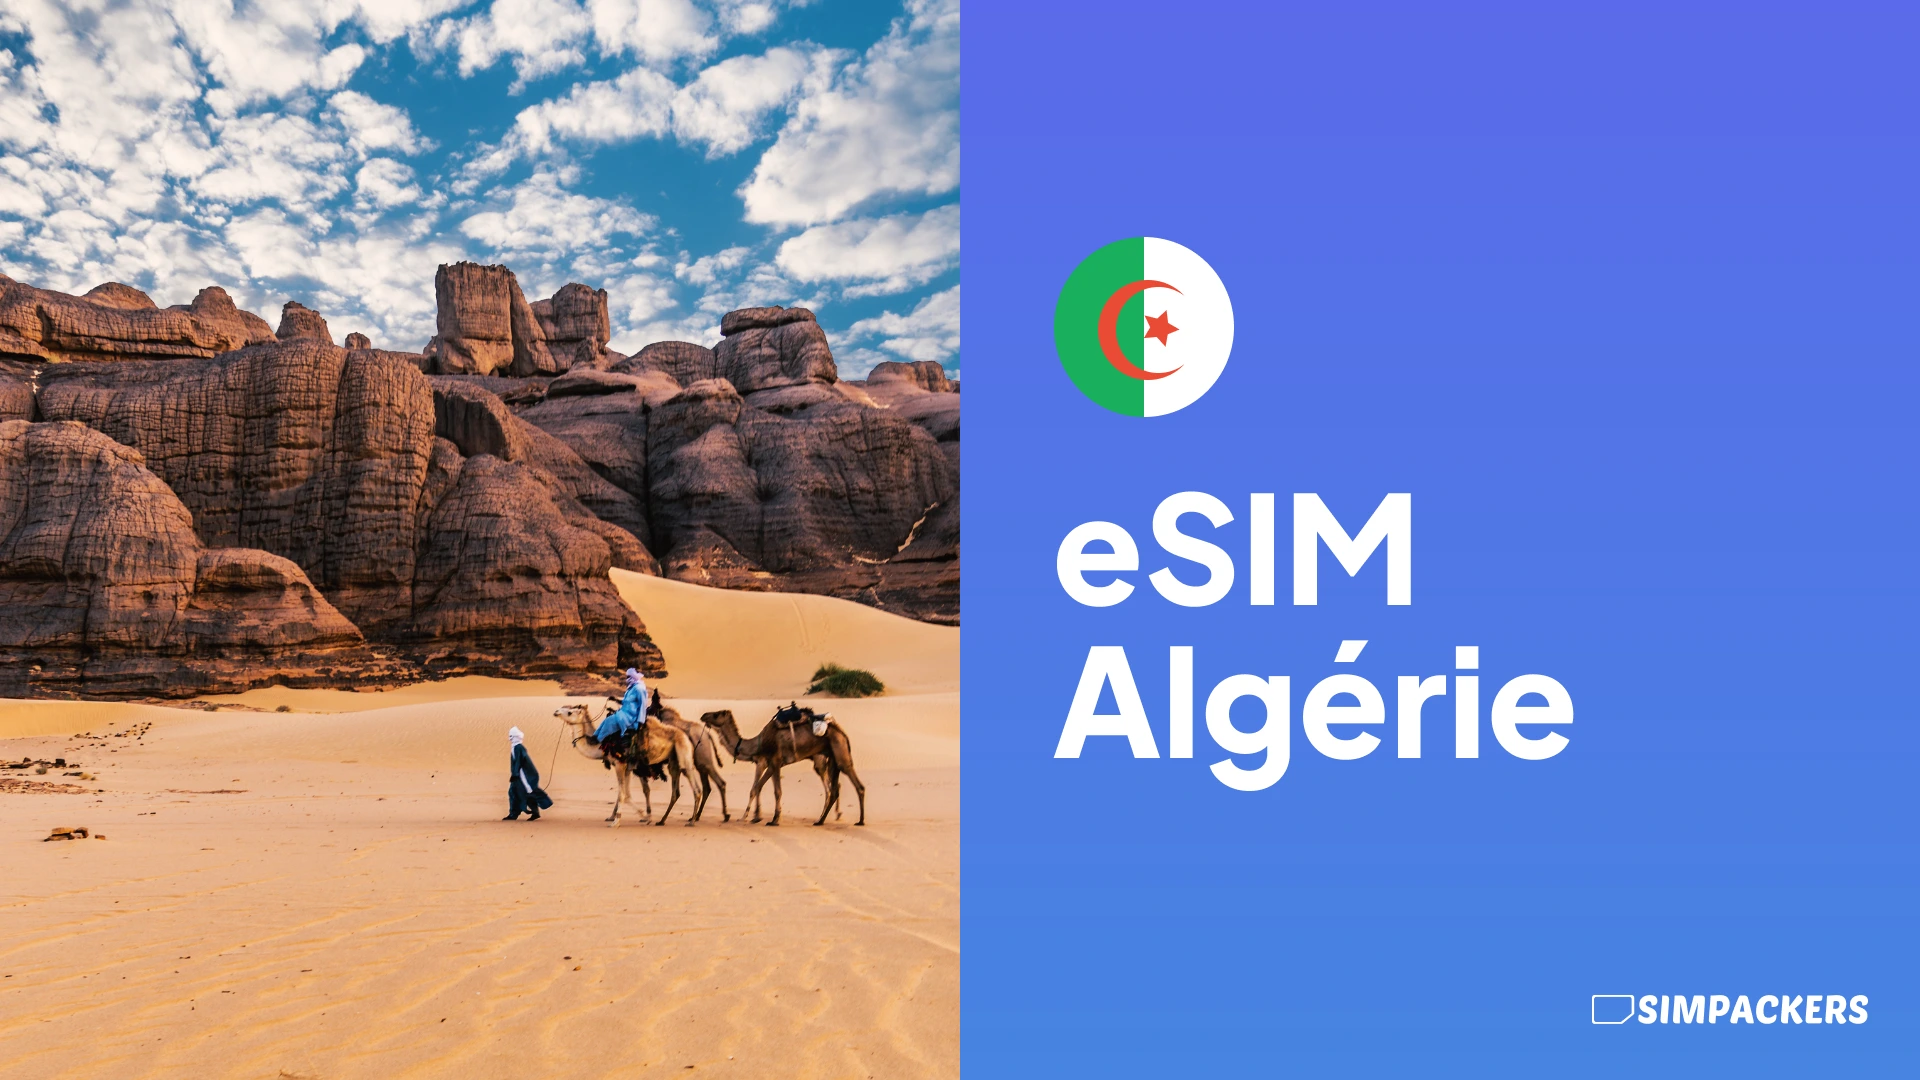 FR/FEATURED_IMAGES/esim-algerie.webp